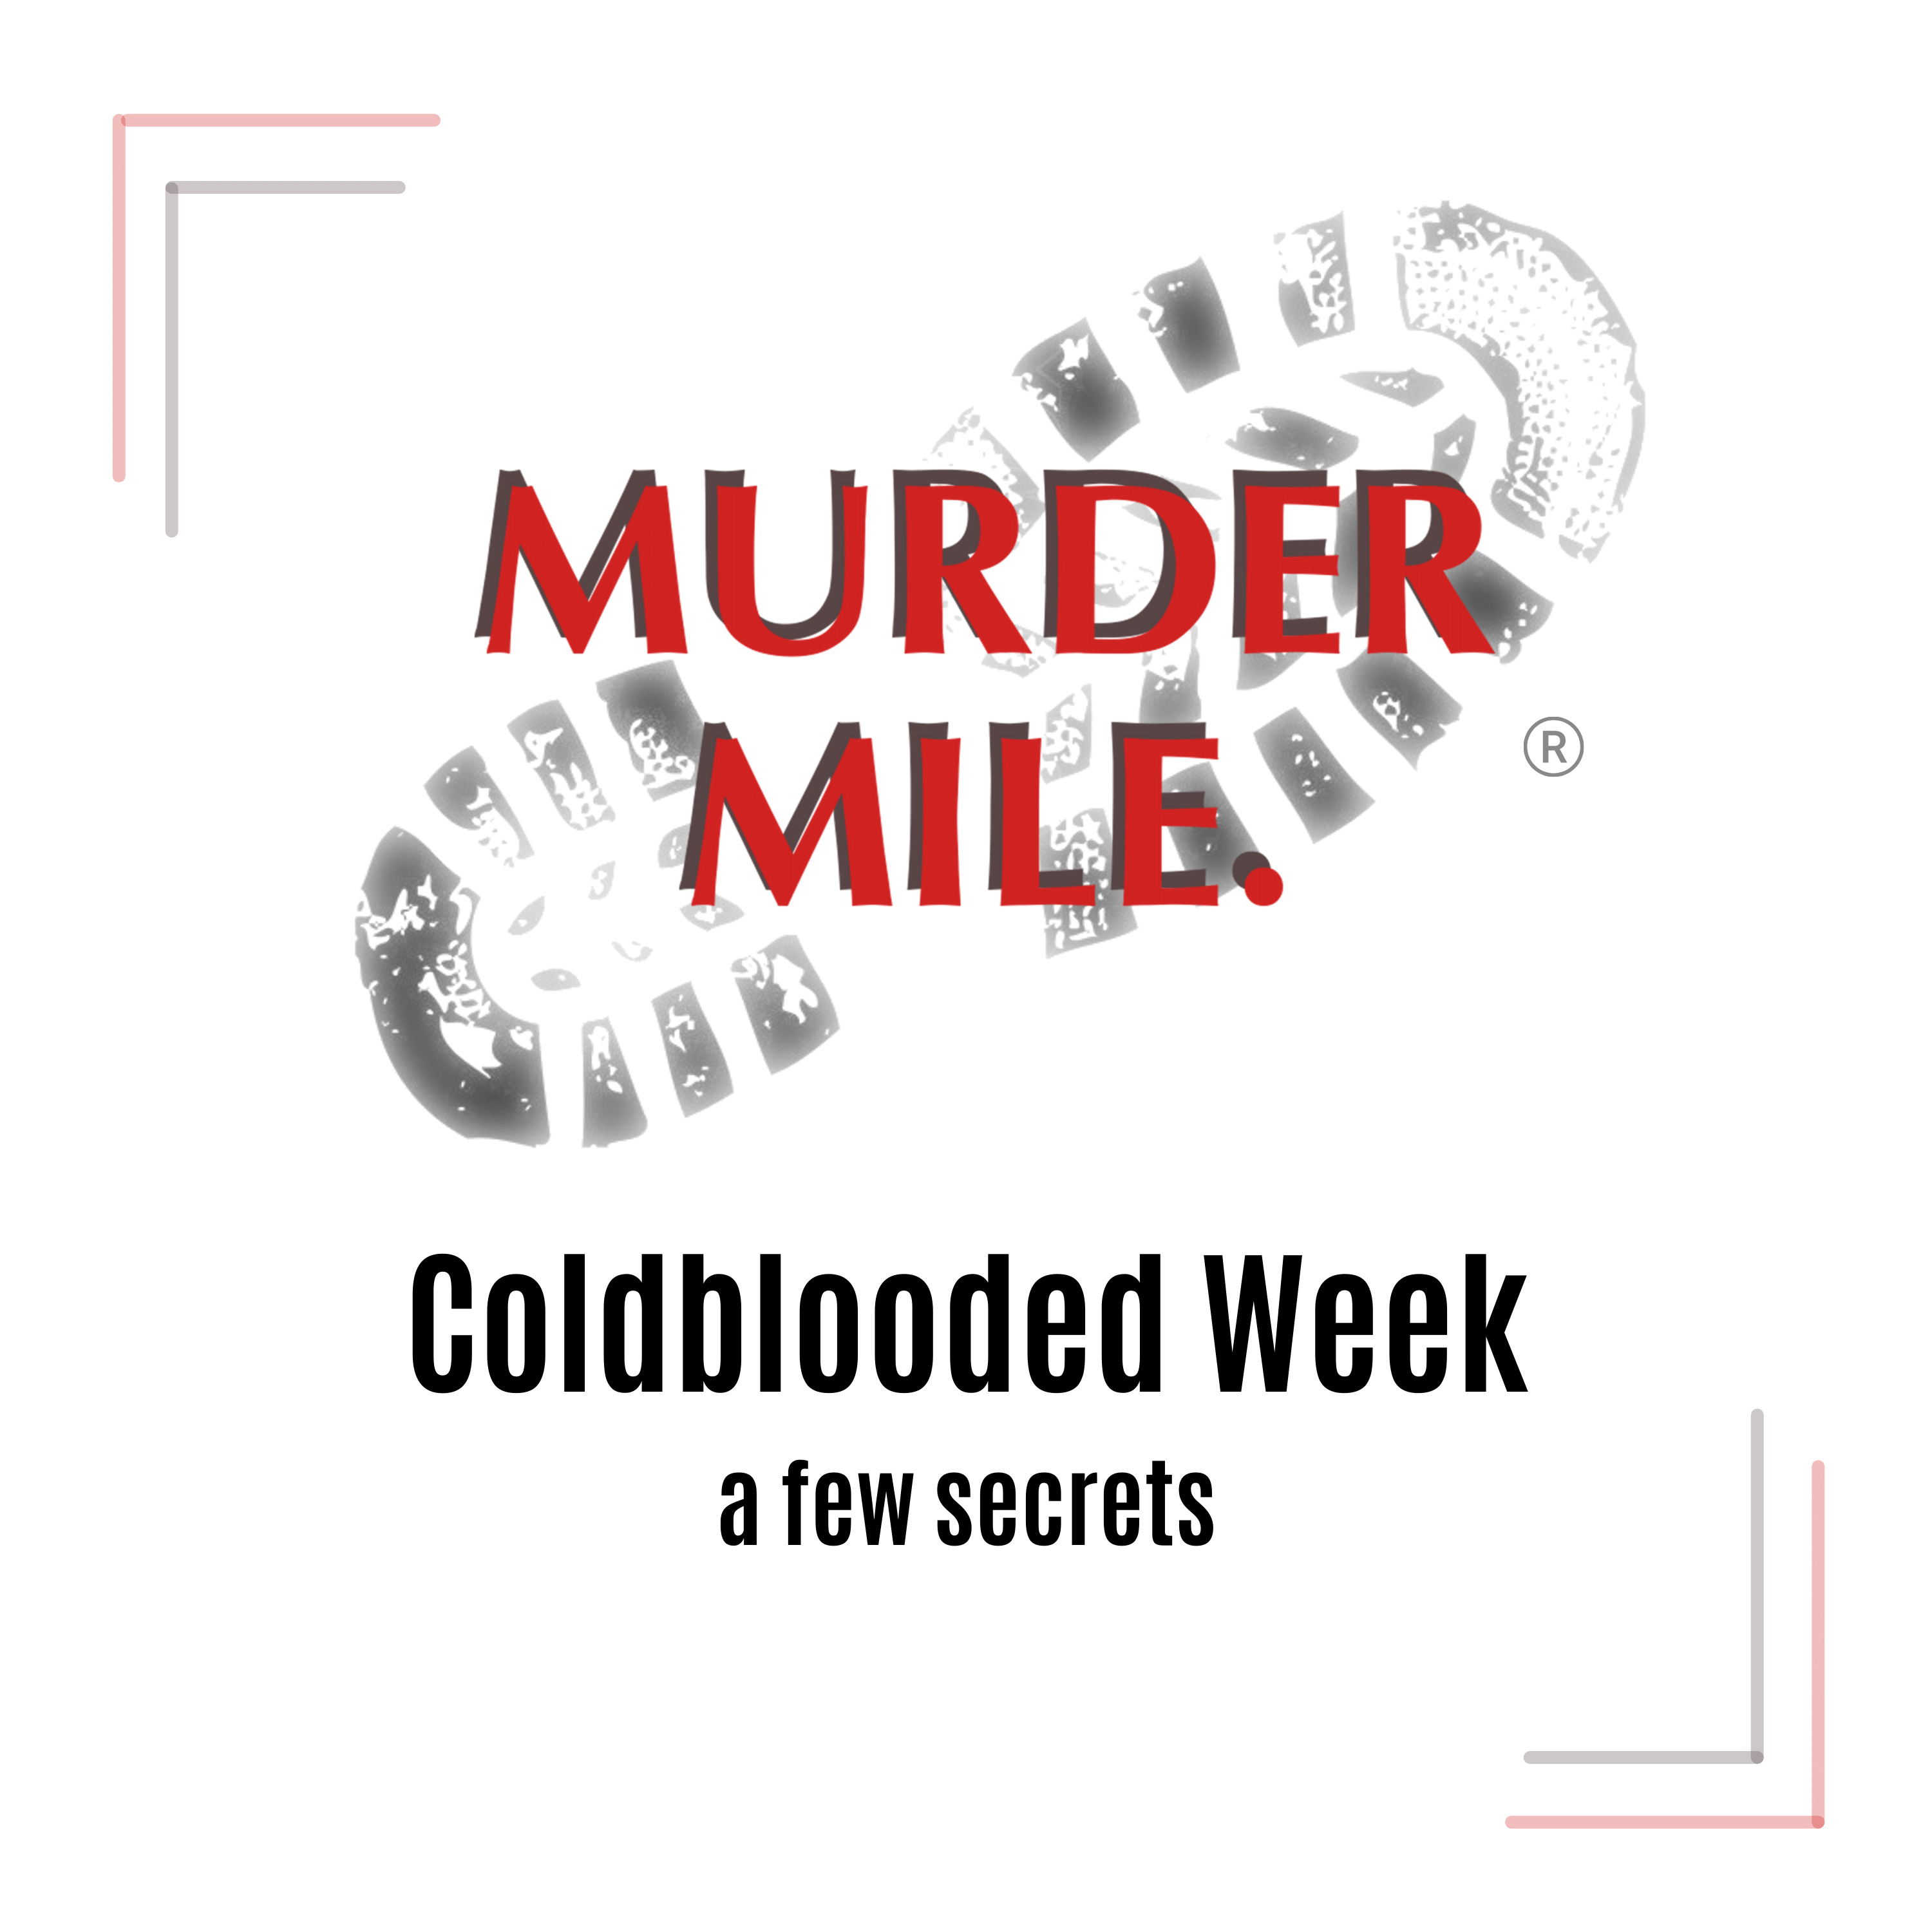 Coldblooded Week – A Few Secrets